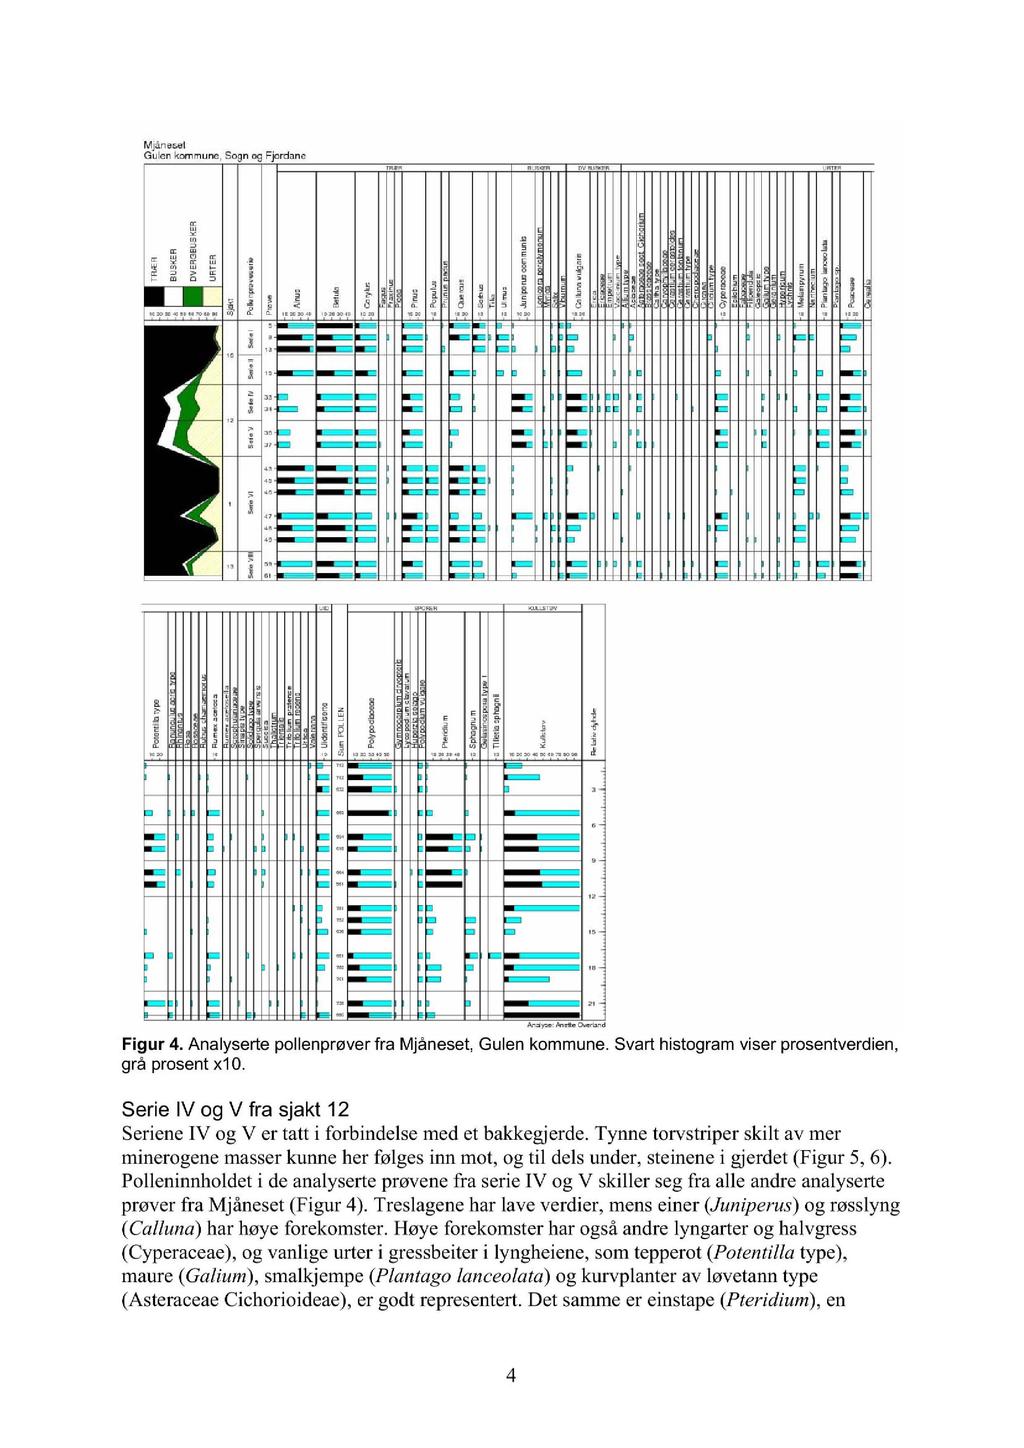 Mjånefiet Gu len kommune, = Figur 4. Analyserte pollenprøver fra Mjåneset, Gulen kommune. Svart histogram viser prosentverdien, grå prosent x1 O.